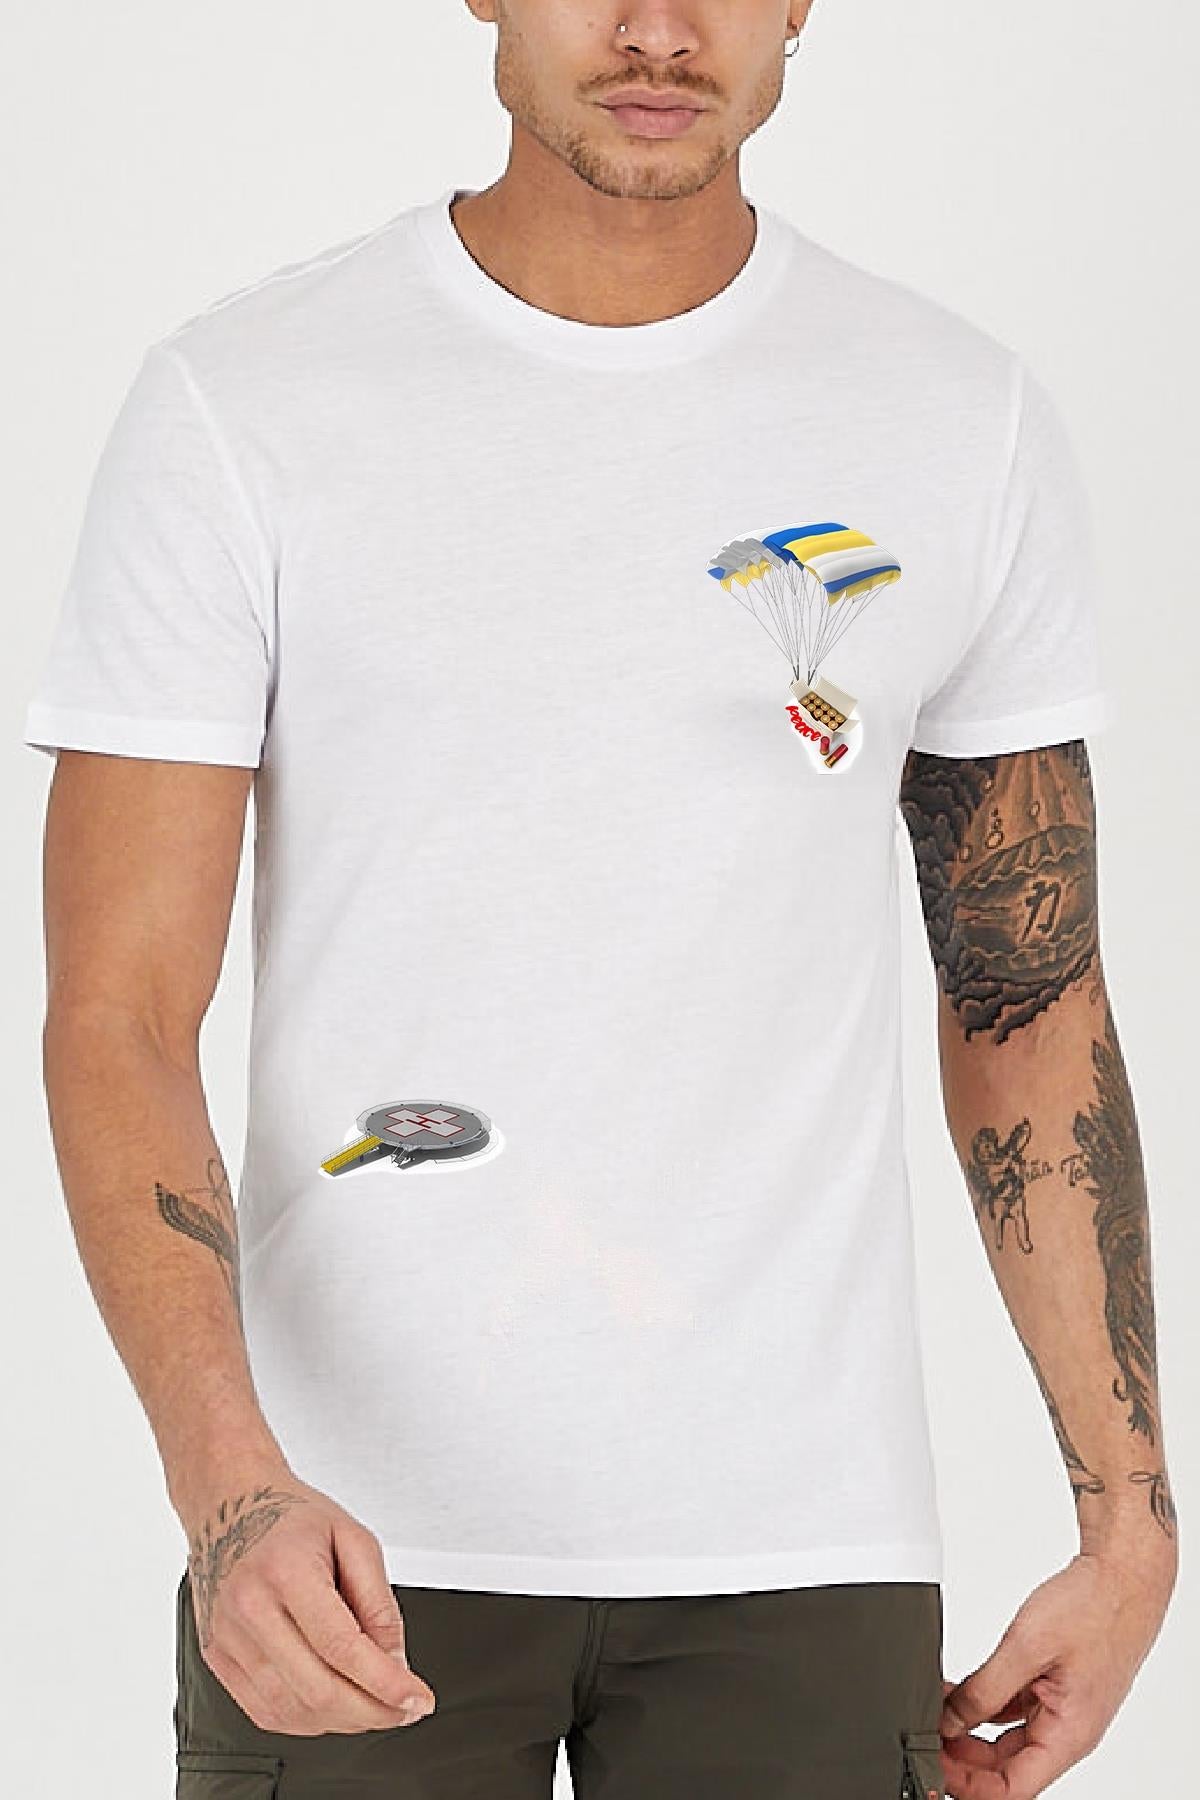 Peace parachute printed Crew Neck men's t -shirt